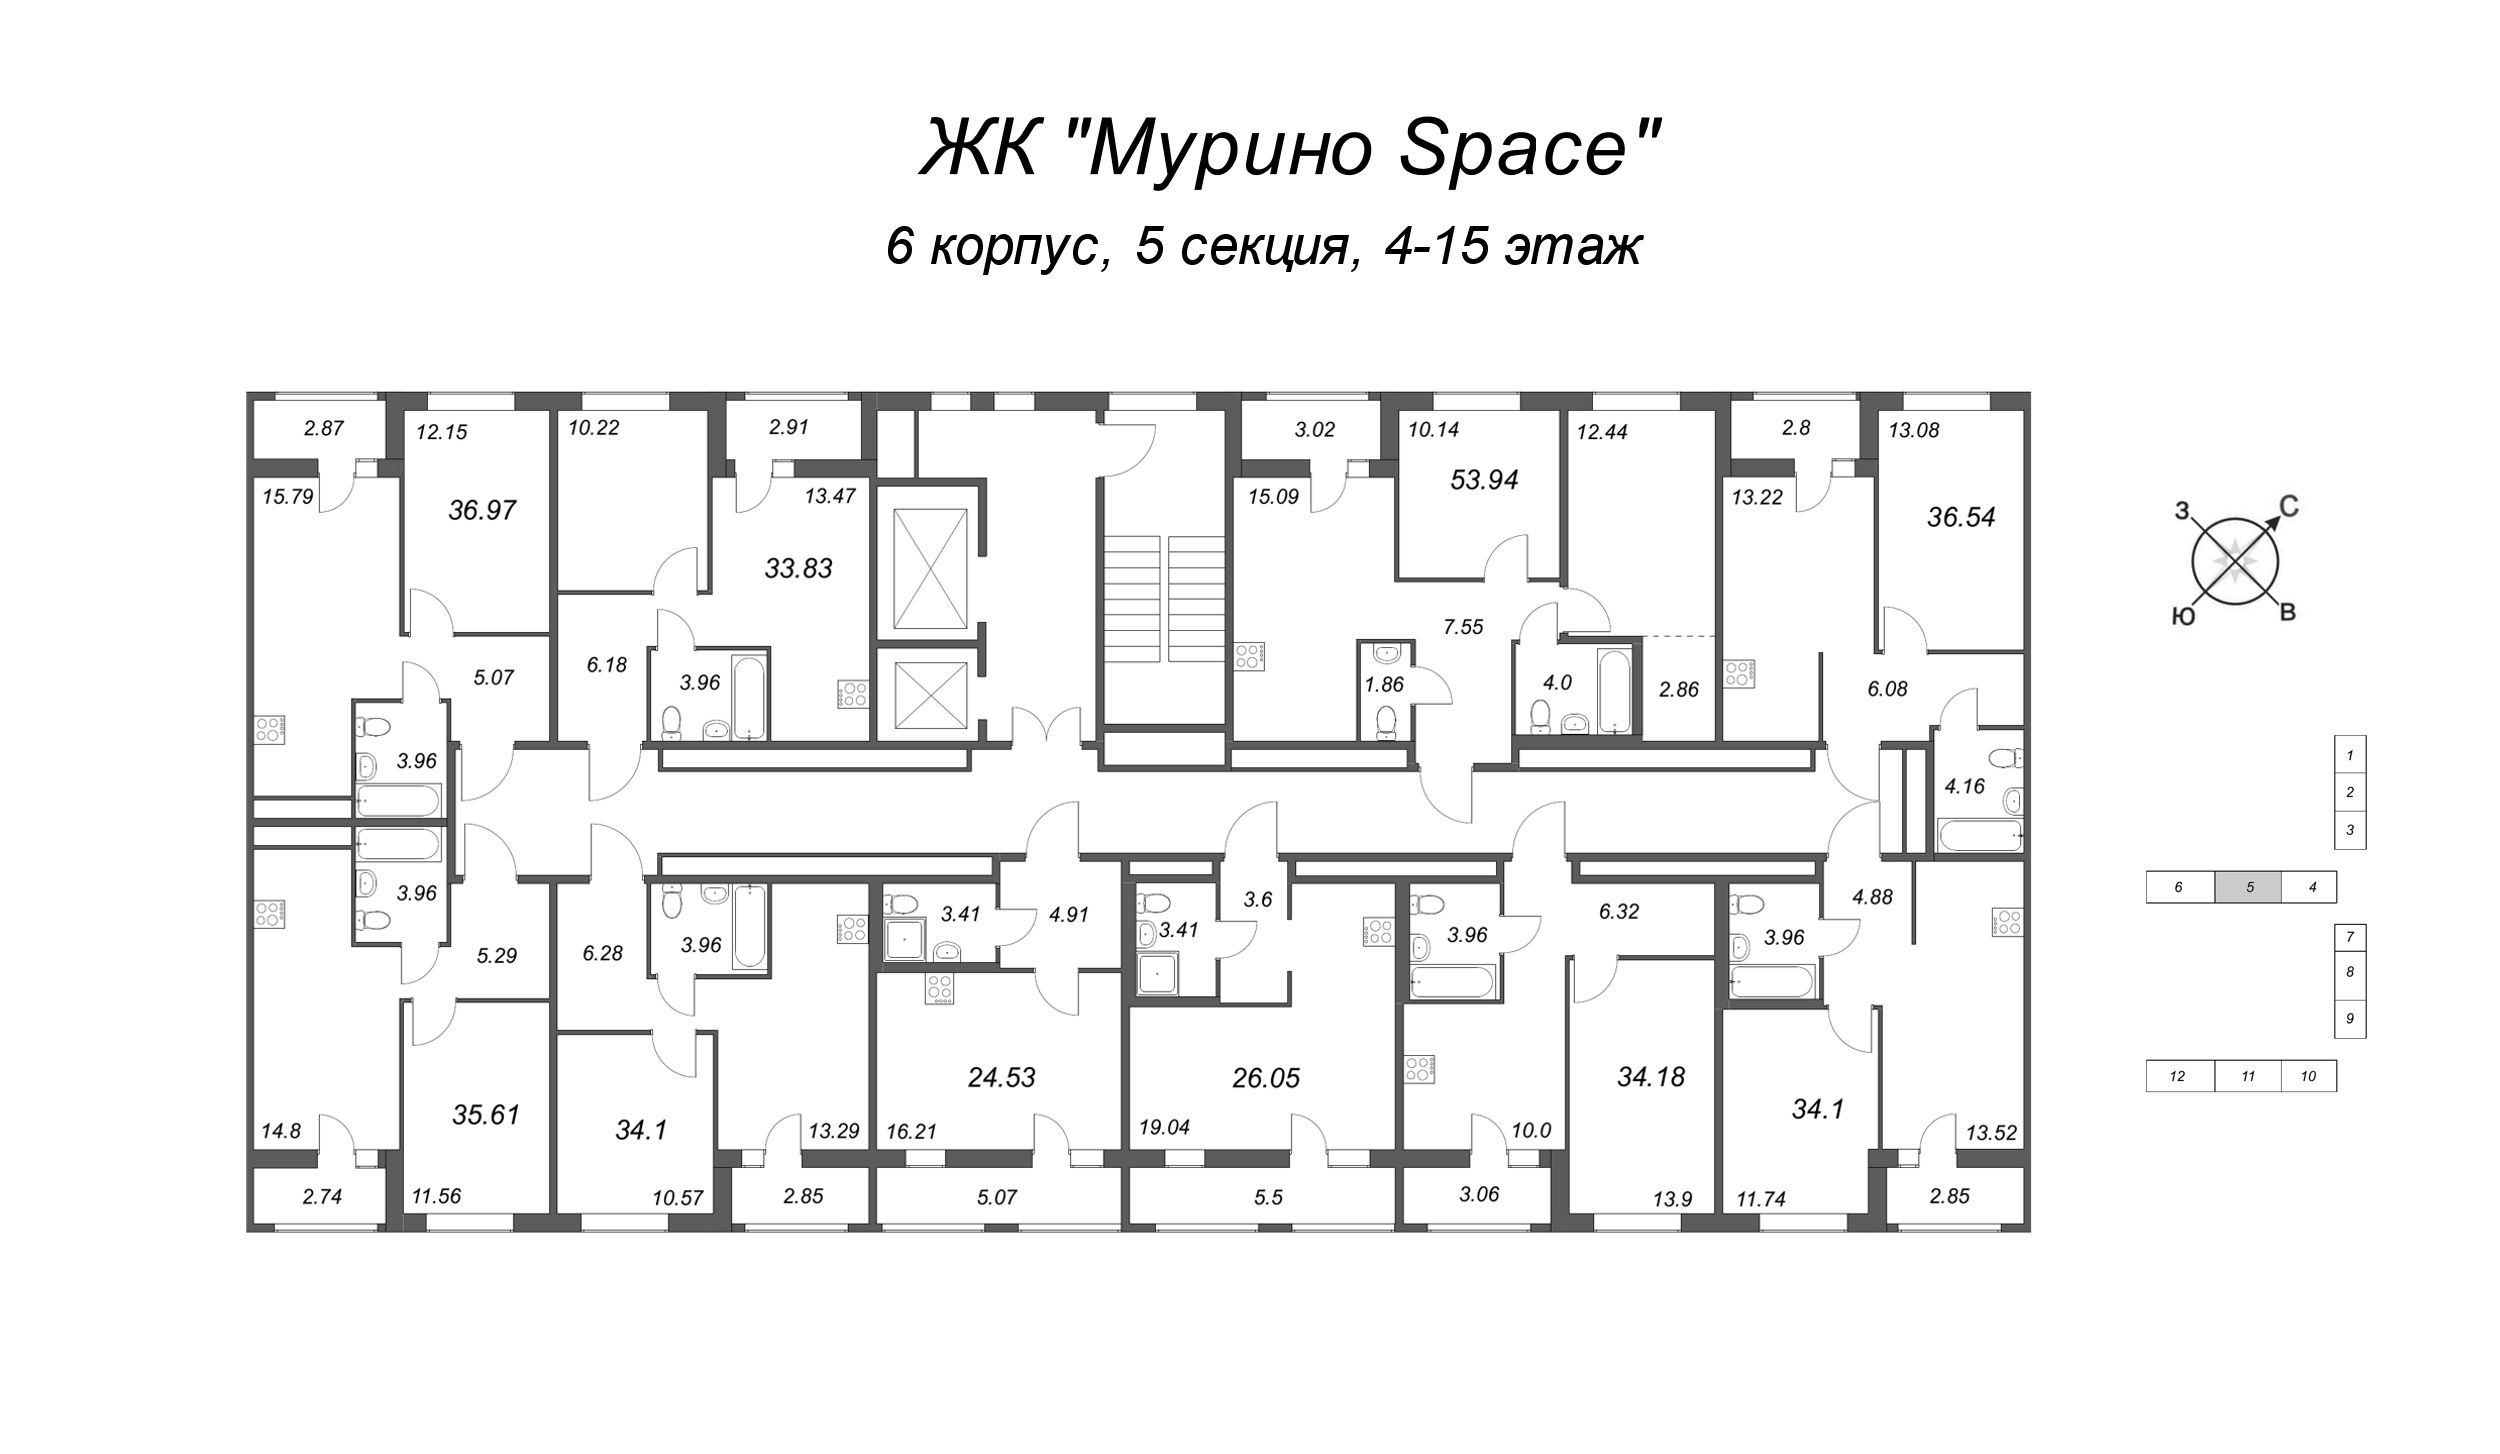 3-комнатная (Евро) квартира, 50.78 м² - планировка этажа